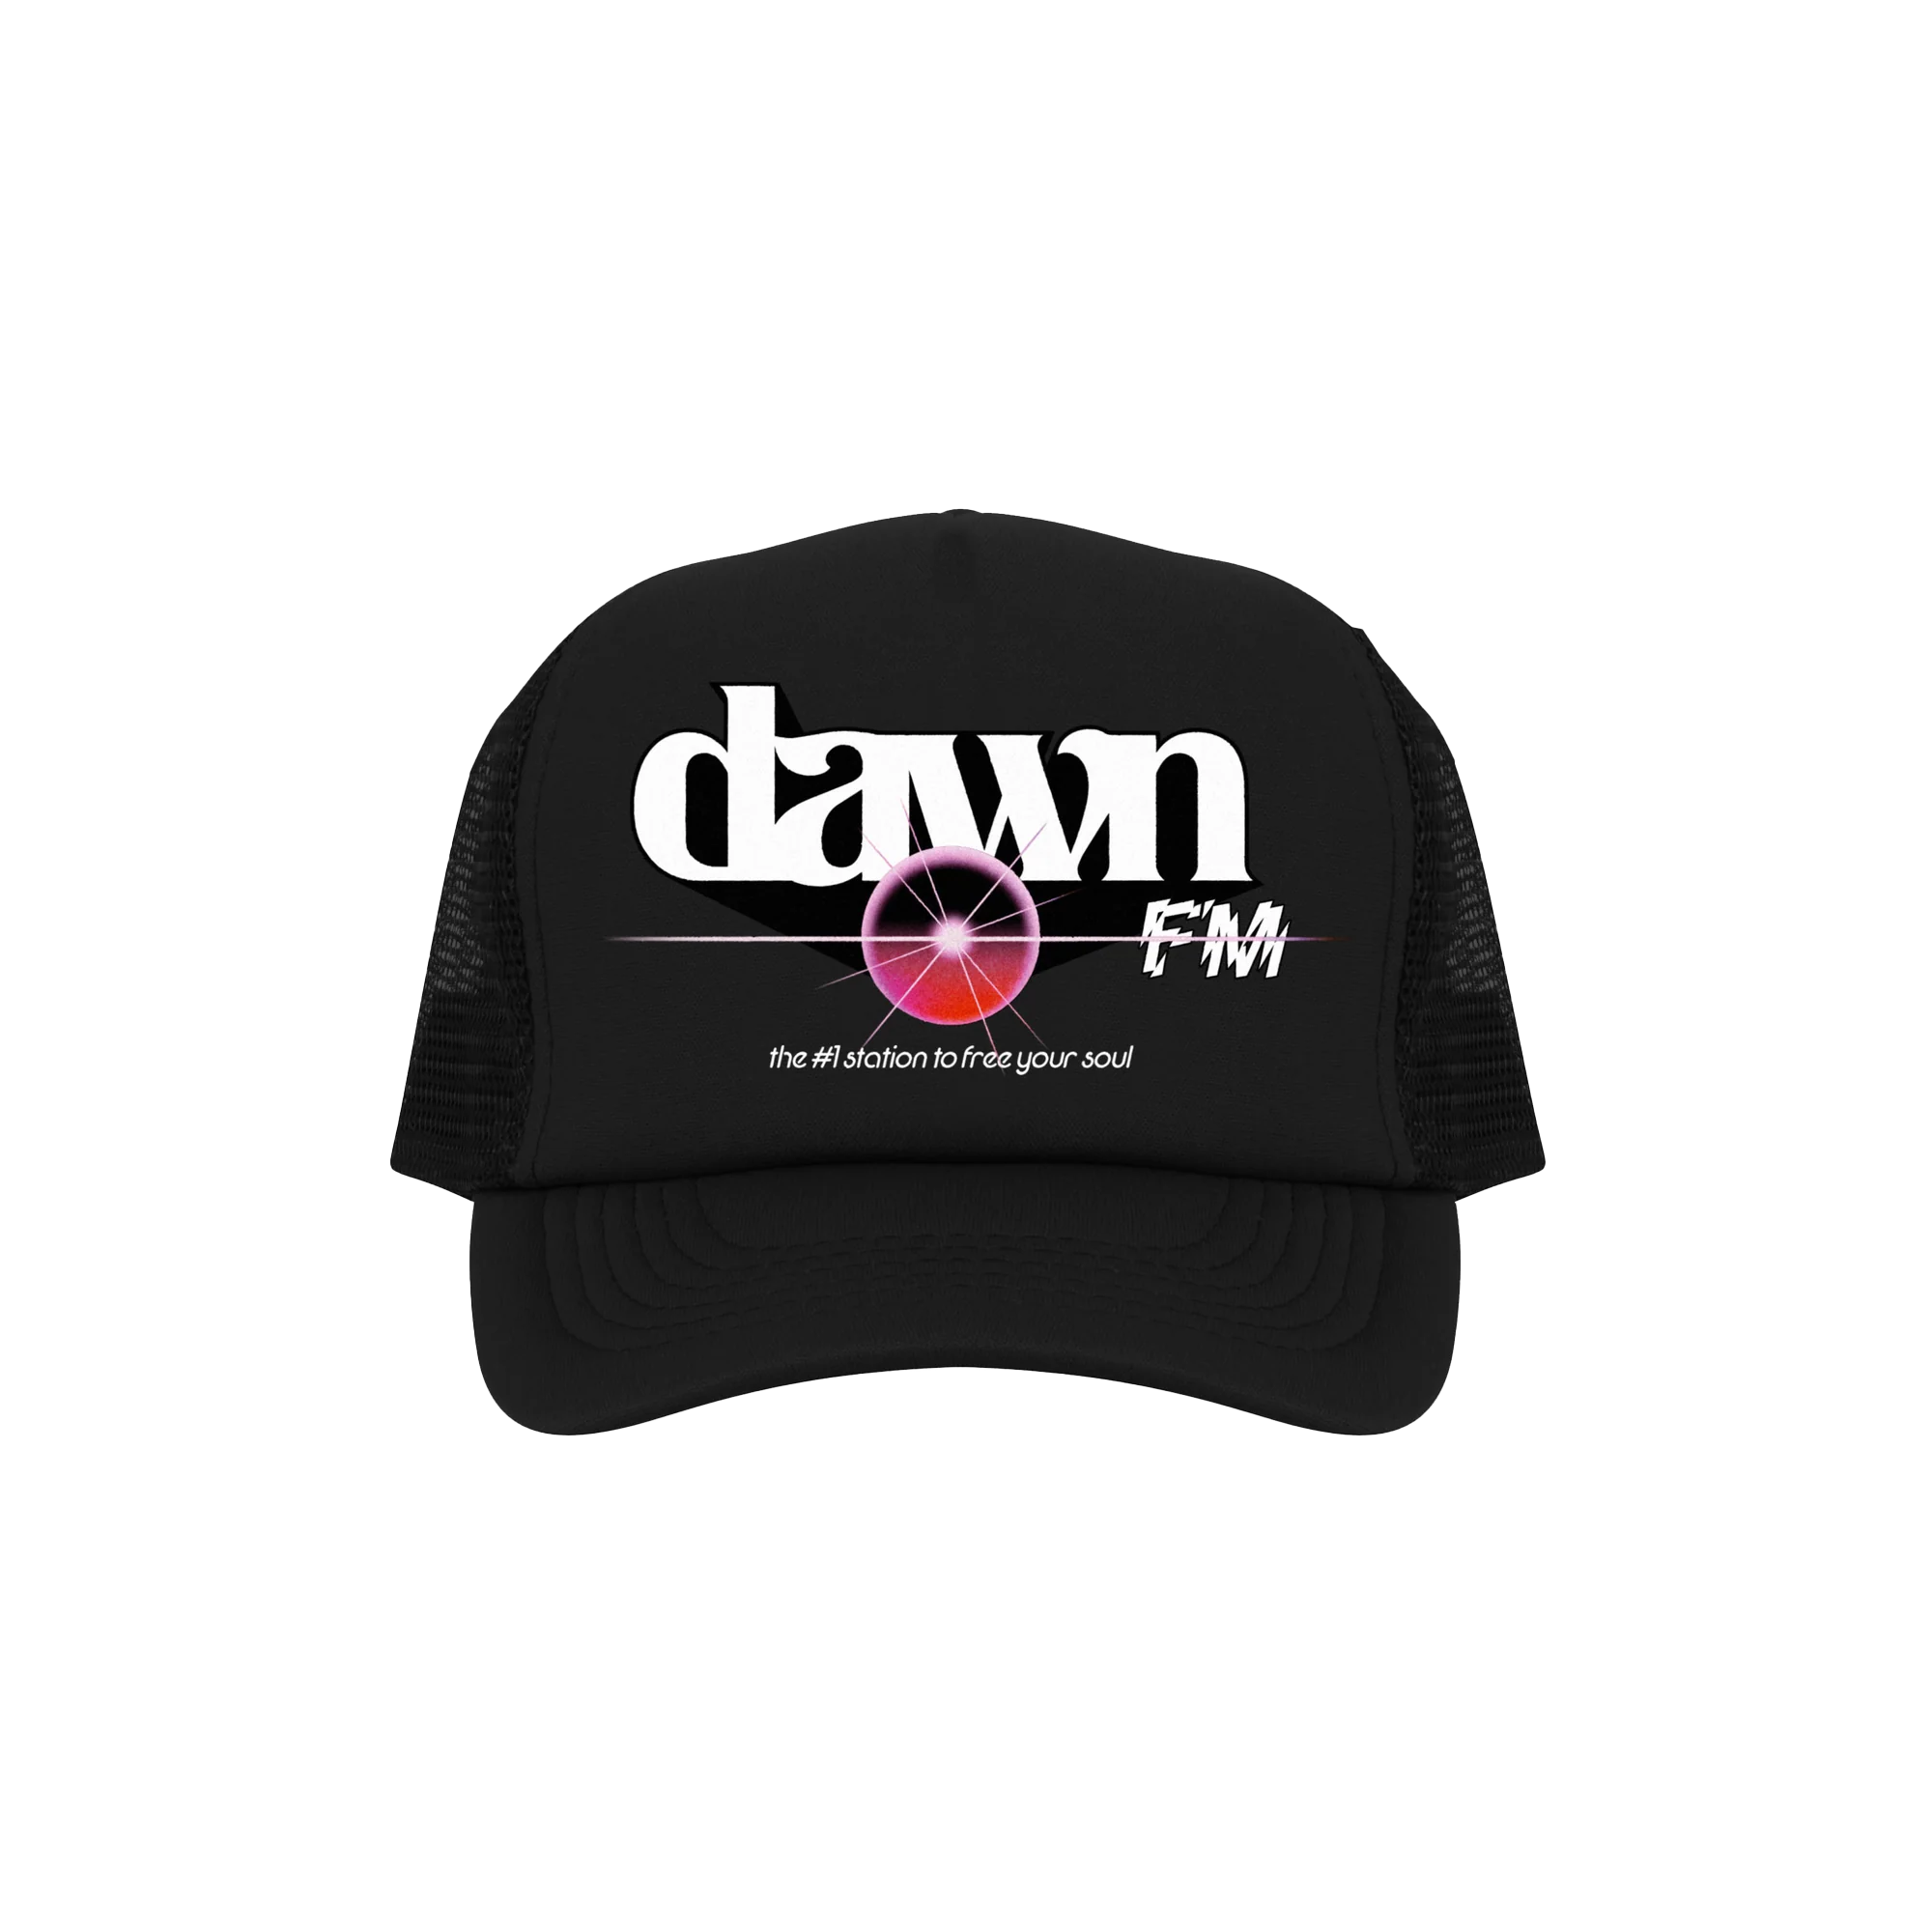 The Weeknd - Dawn Fm The #1 Station Foam Trucker